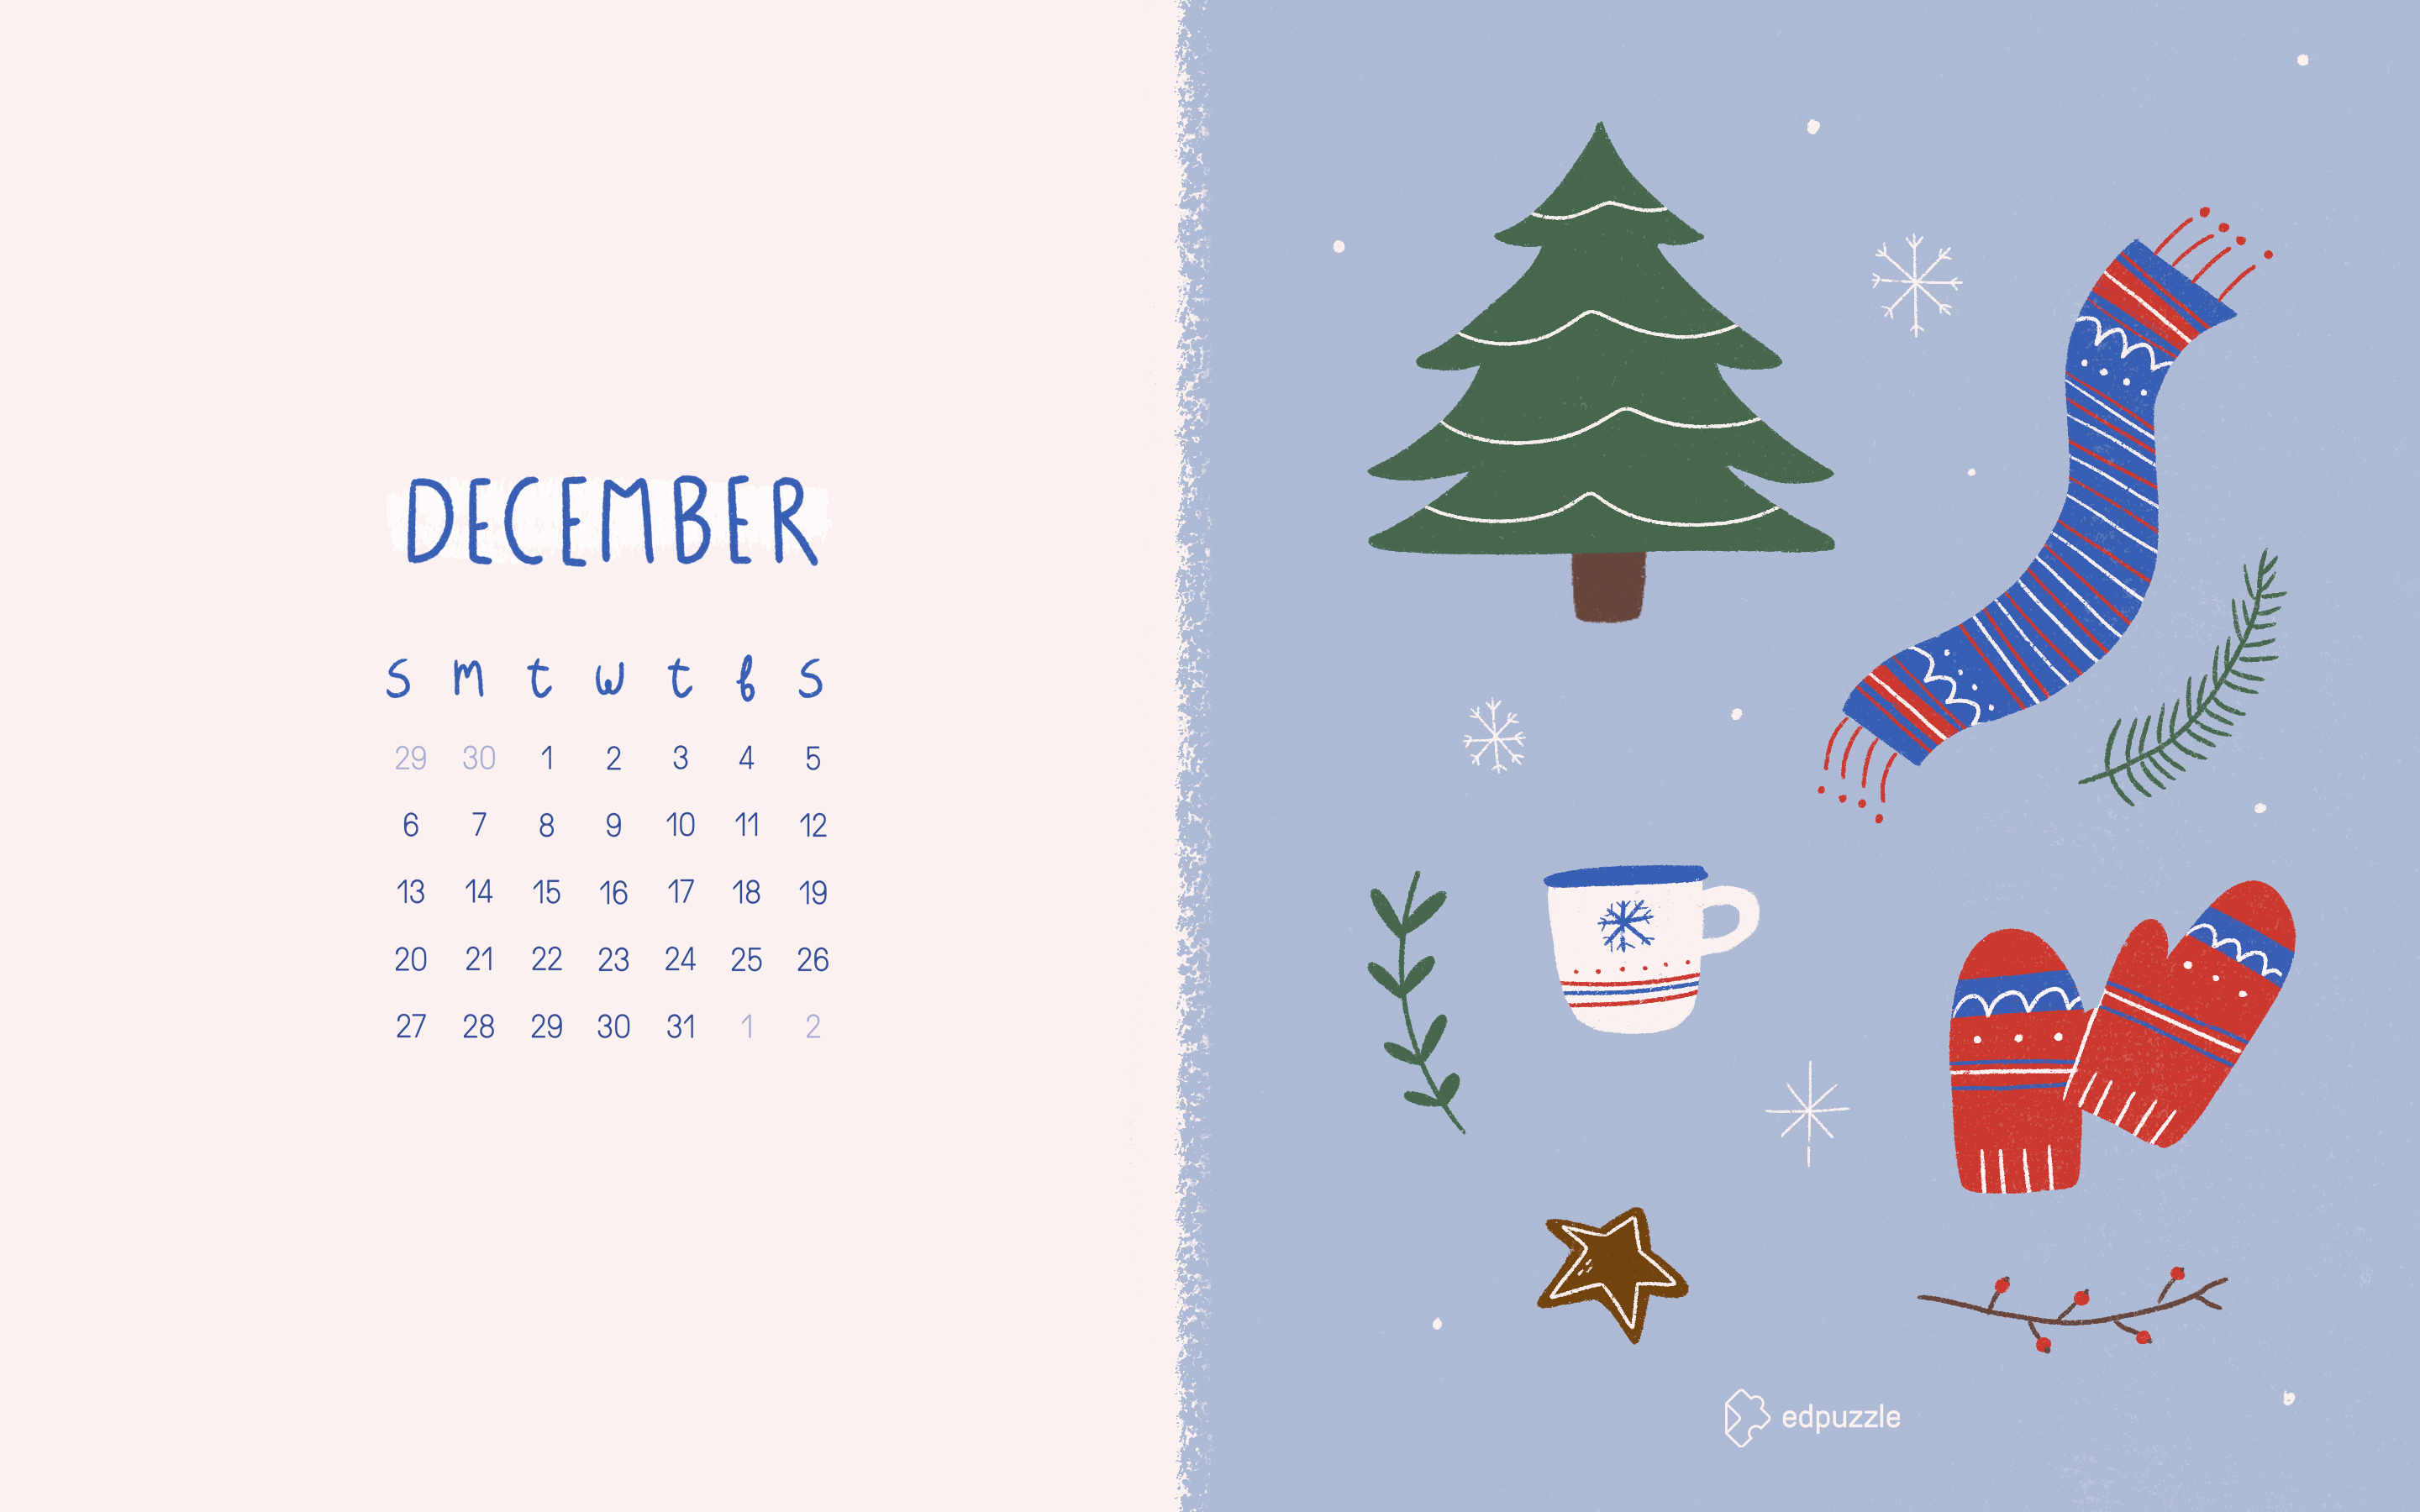 December Calendar Wallpaper | Edpuzzle Blog